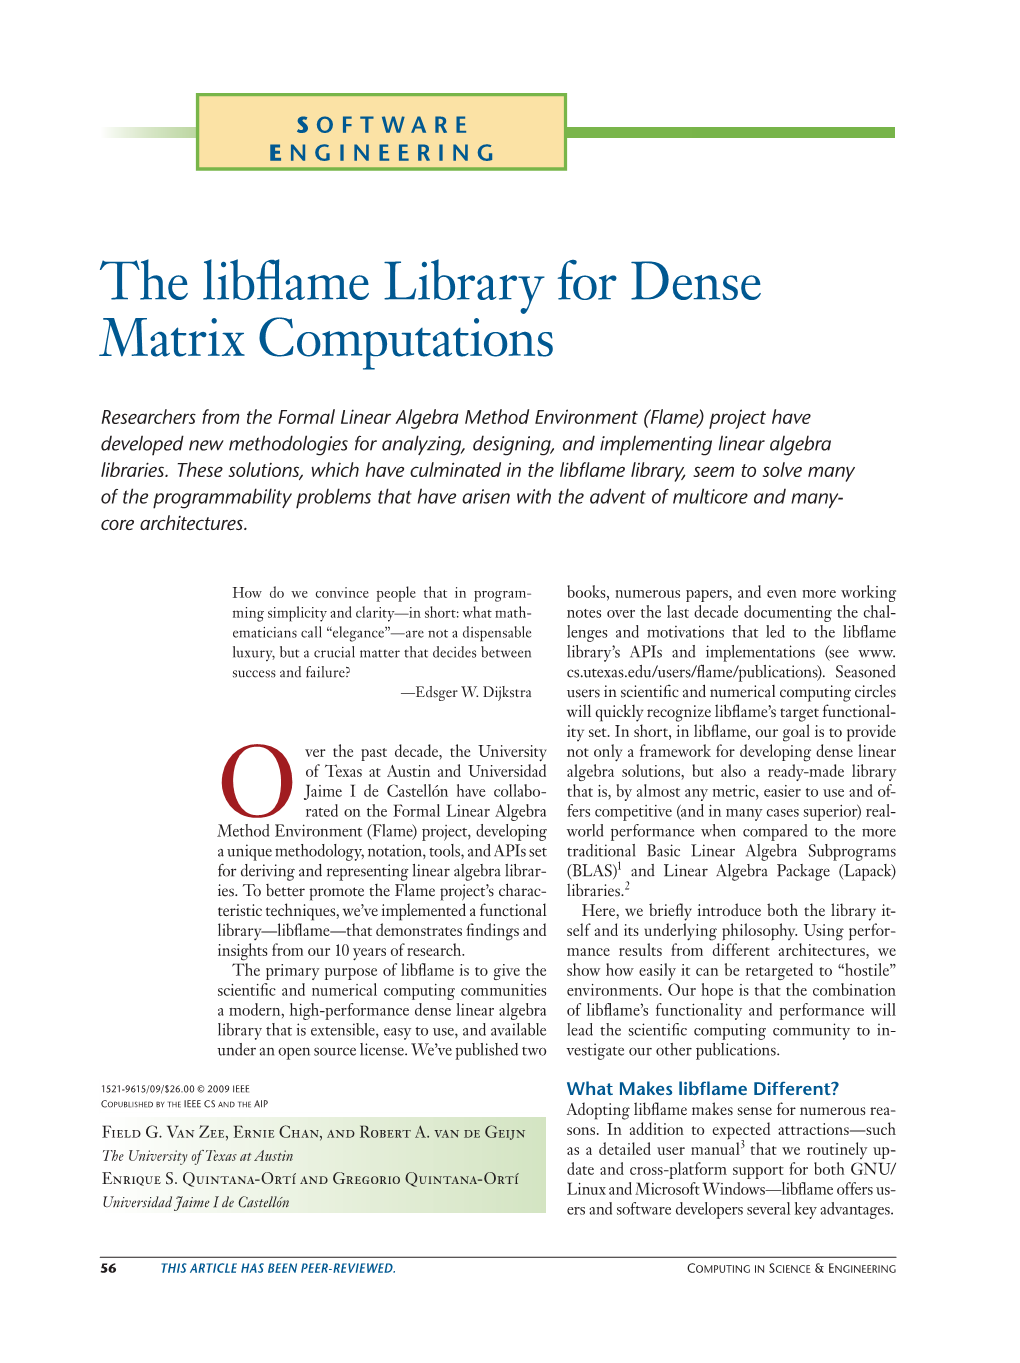 The Libflame Library for Dense Matrix Computations